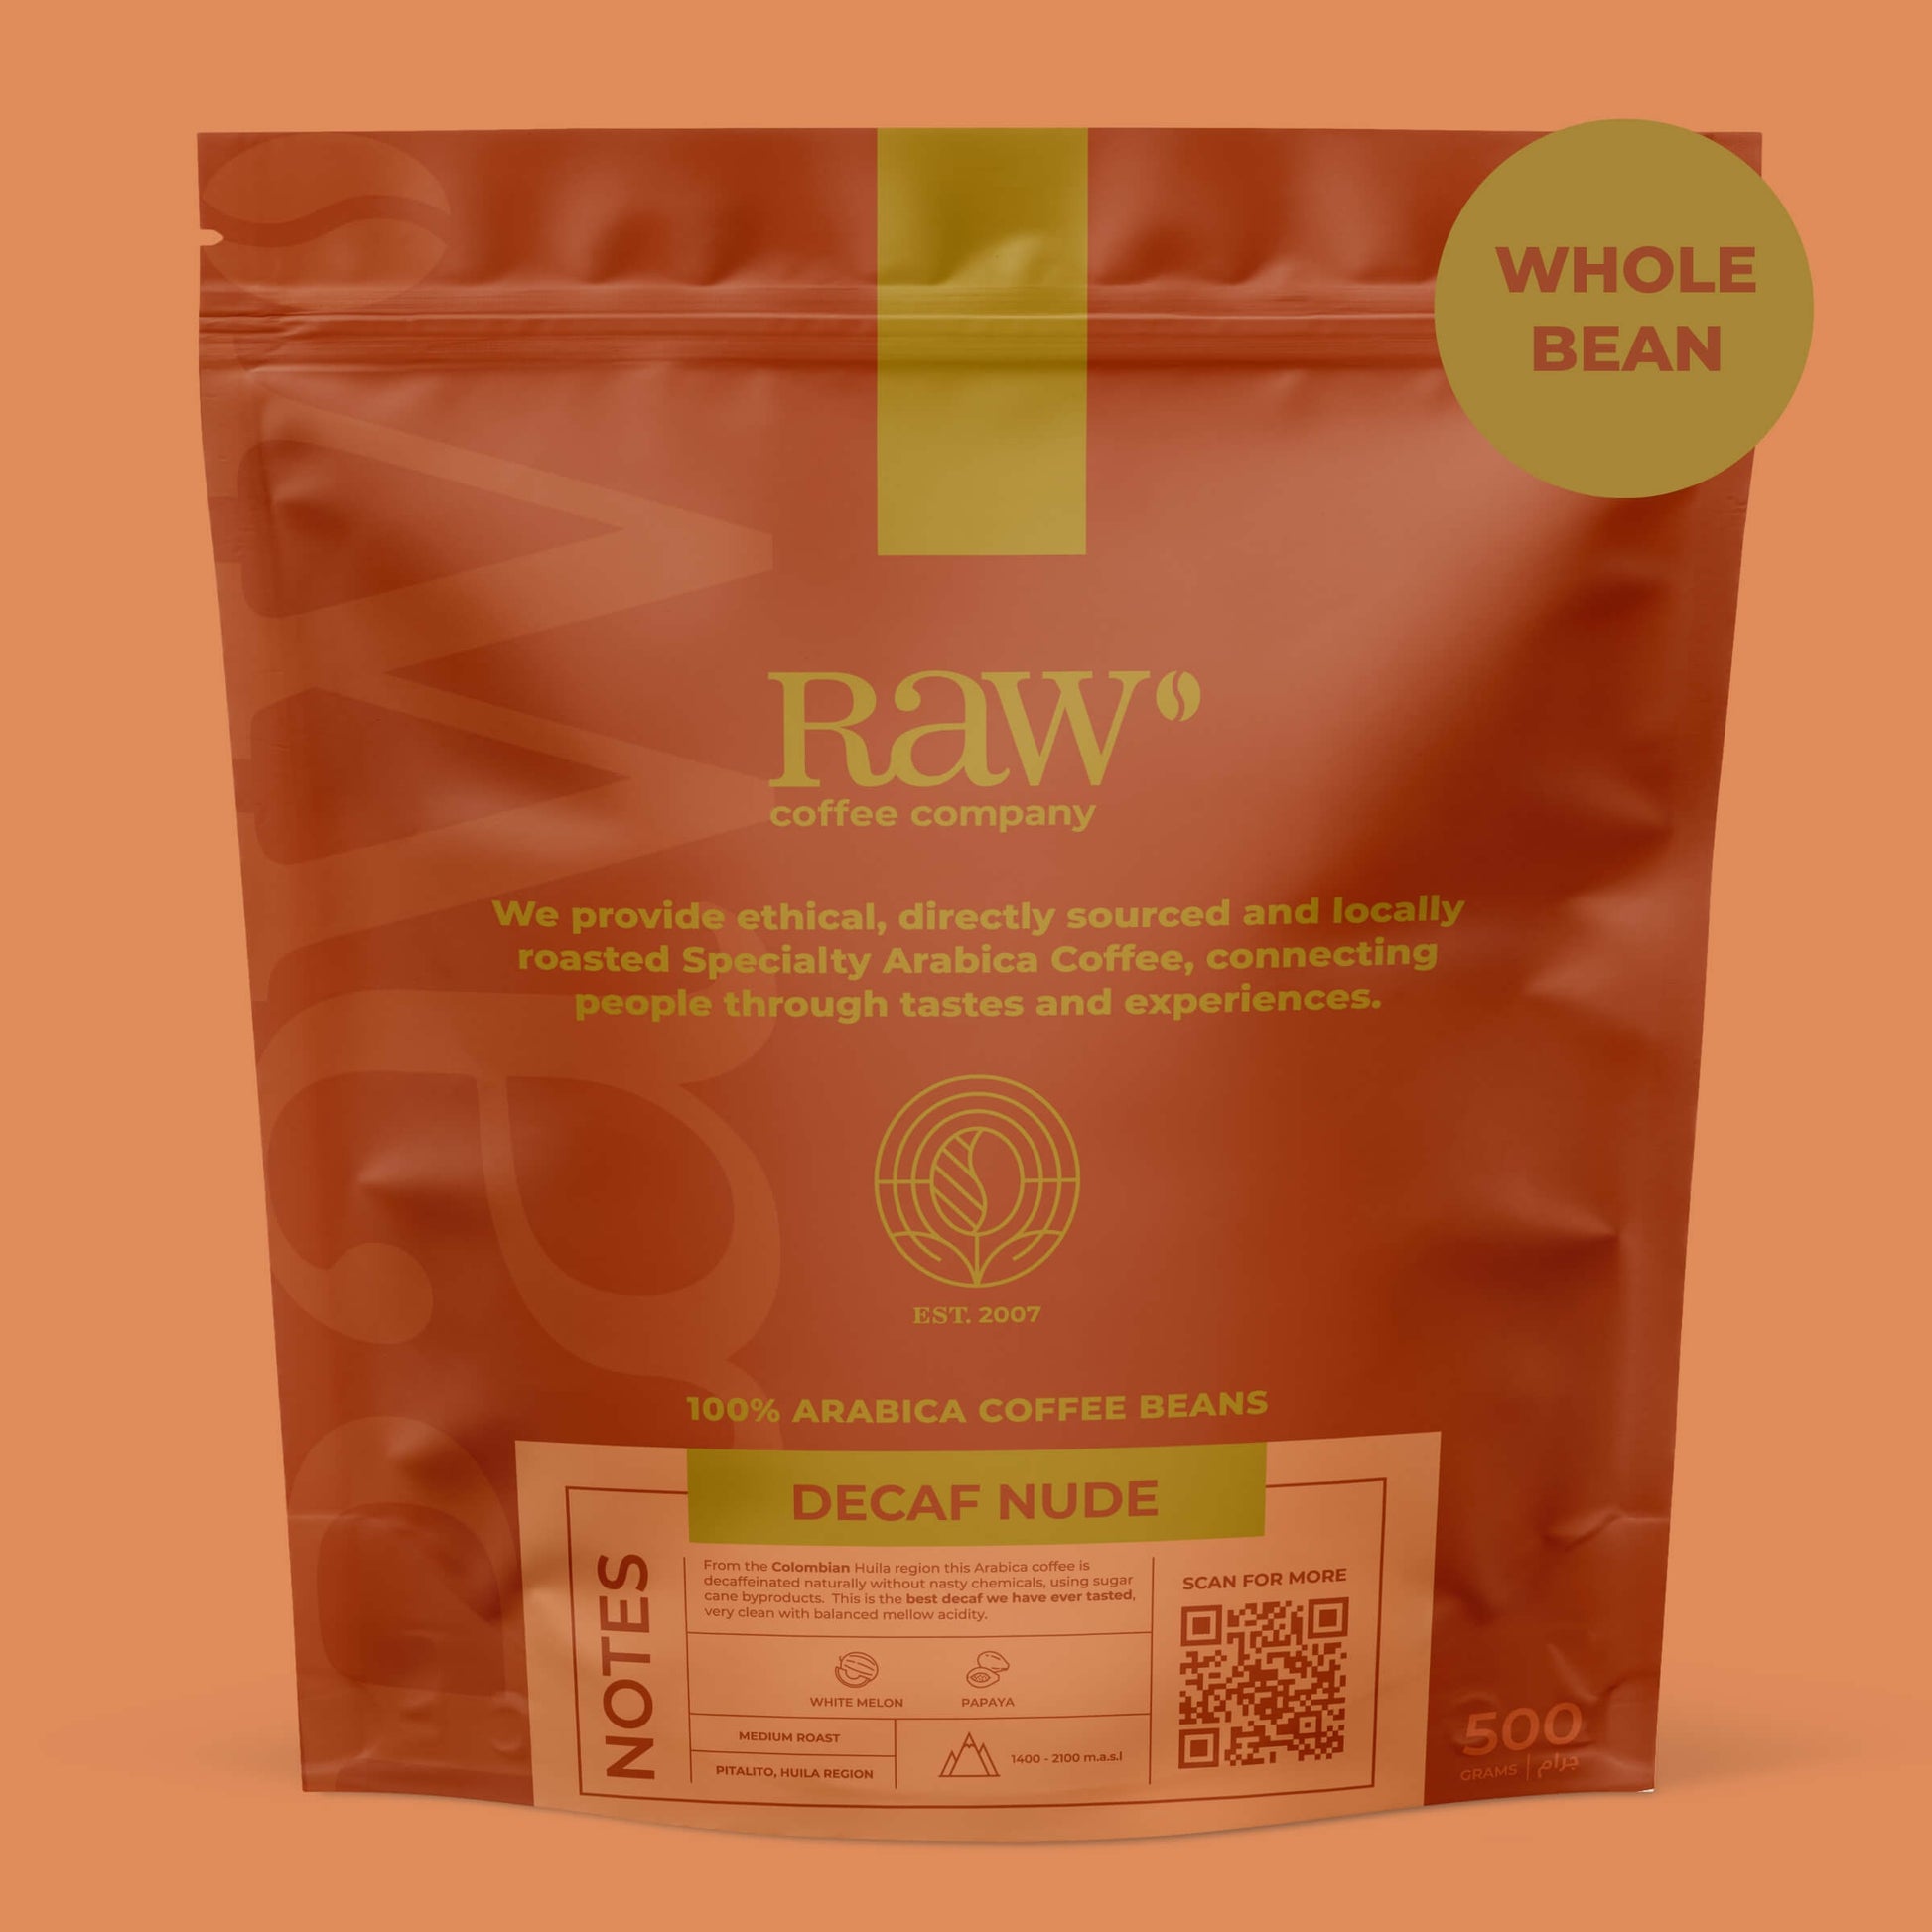 Decaf-Nude-Coffee-500gm-Whole-Bean_RAW-Coffee-Company